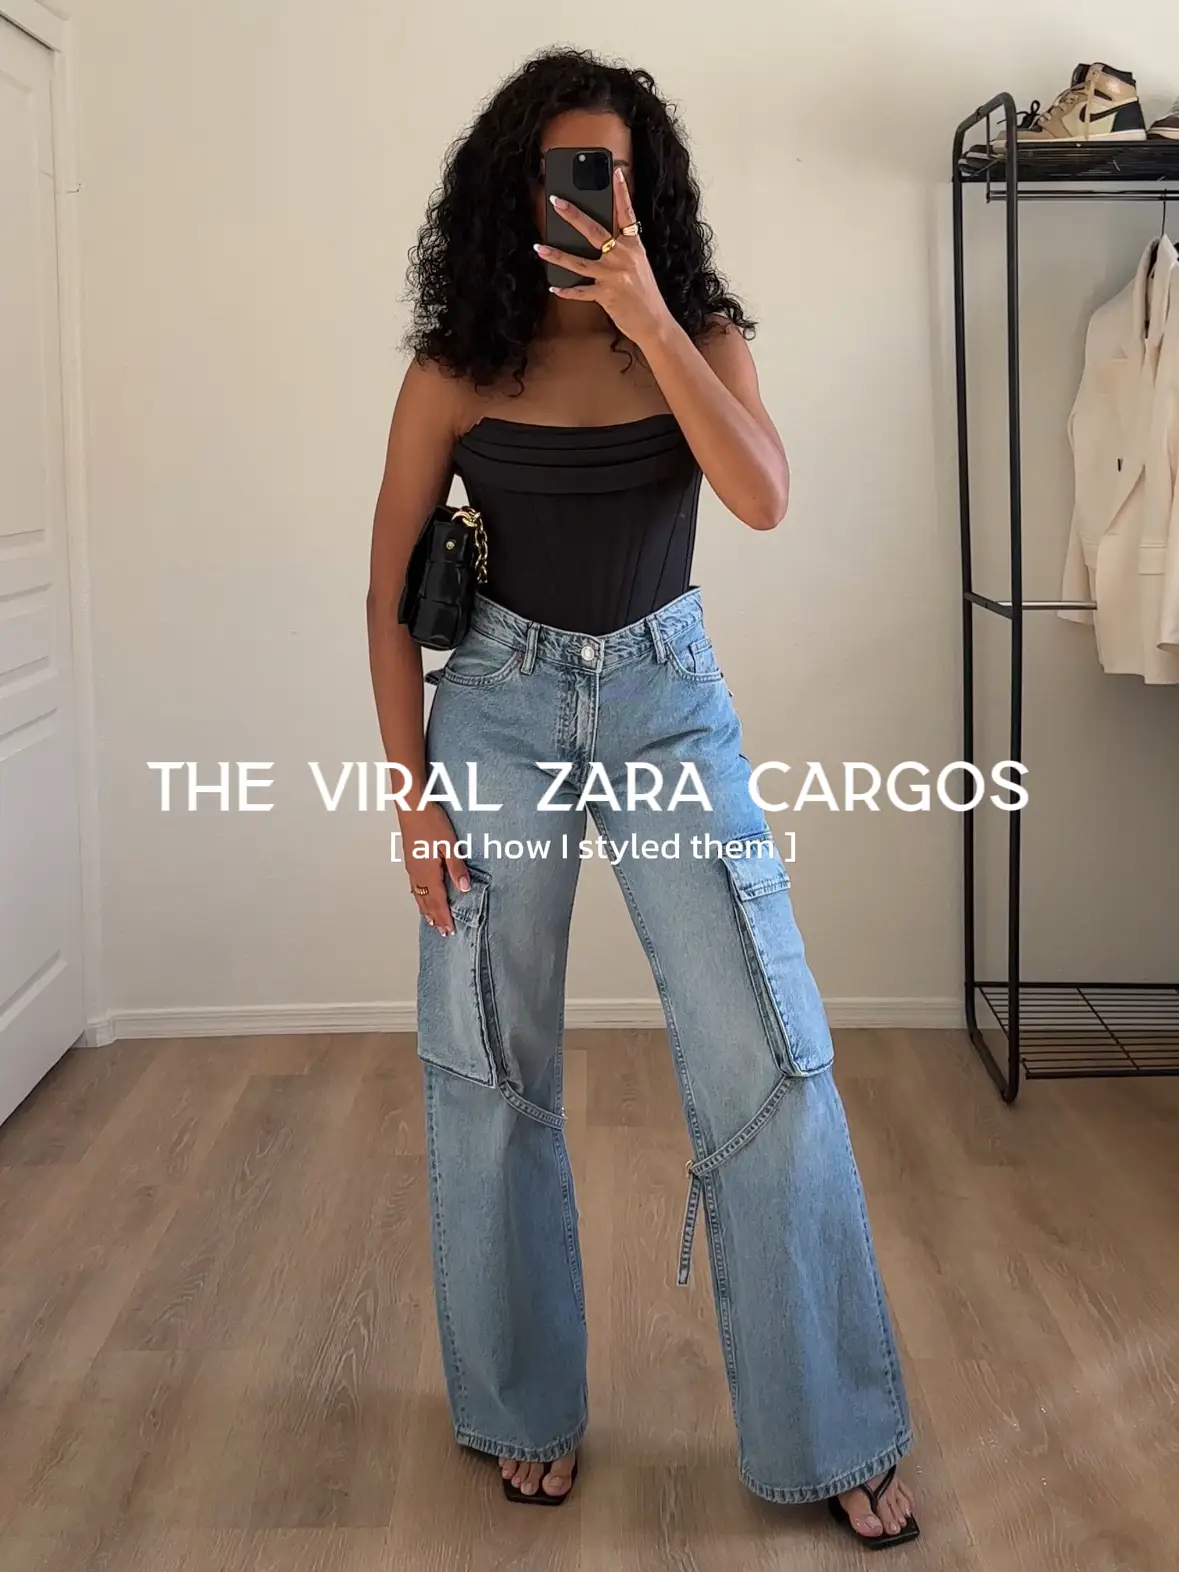 I'm a curvy fashion fan and tried on a Zara haul - it's XXL is so